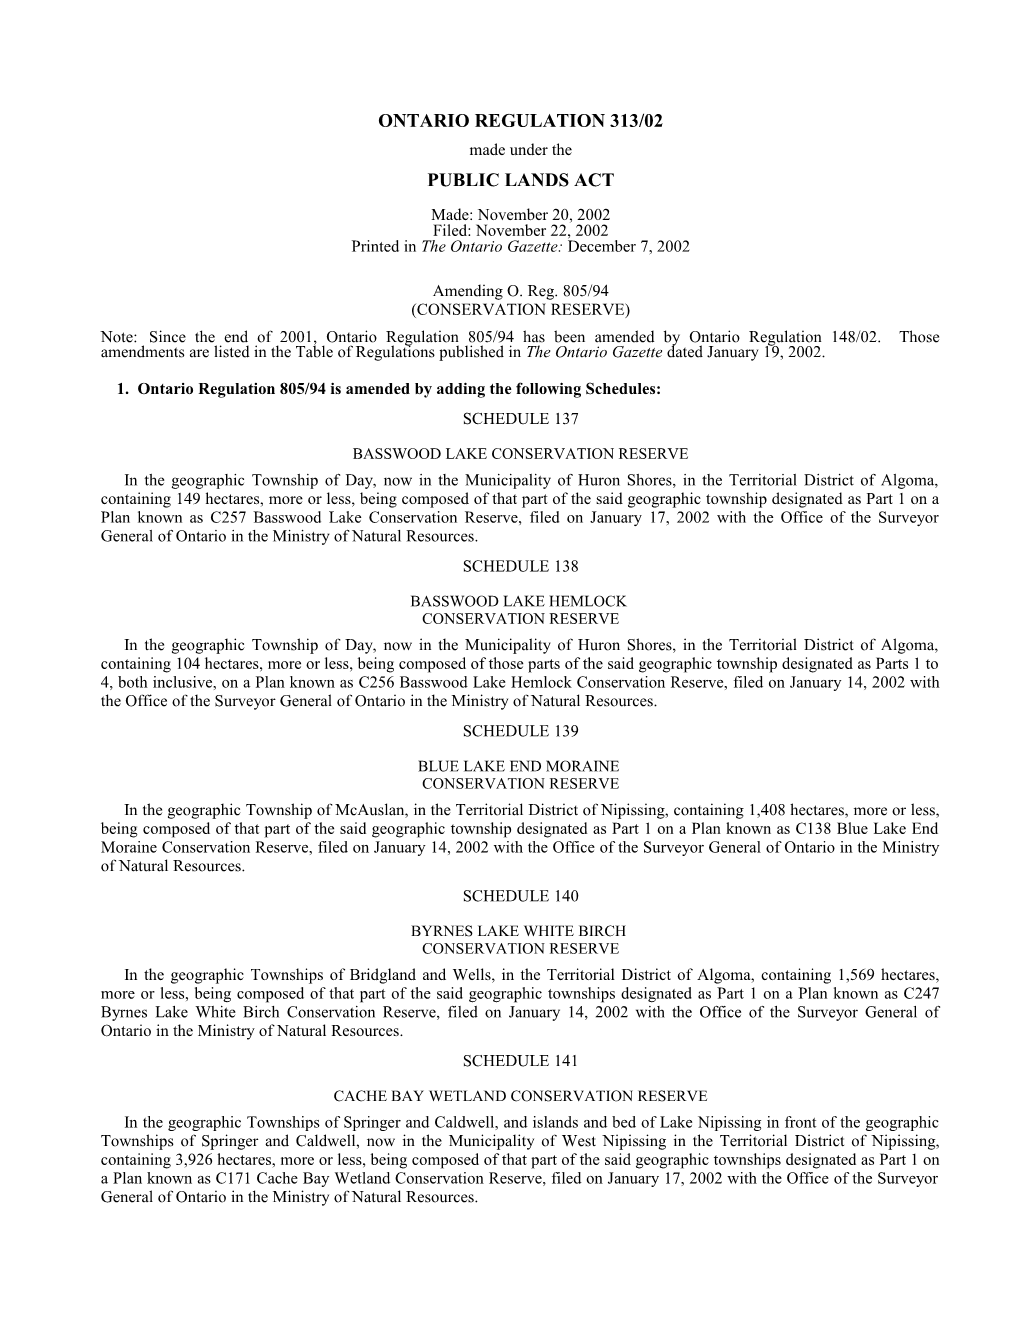 PUBLIC LANDS ACT - O. Reg. 313/02